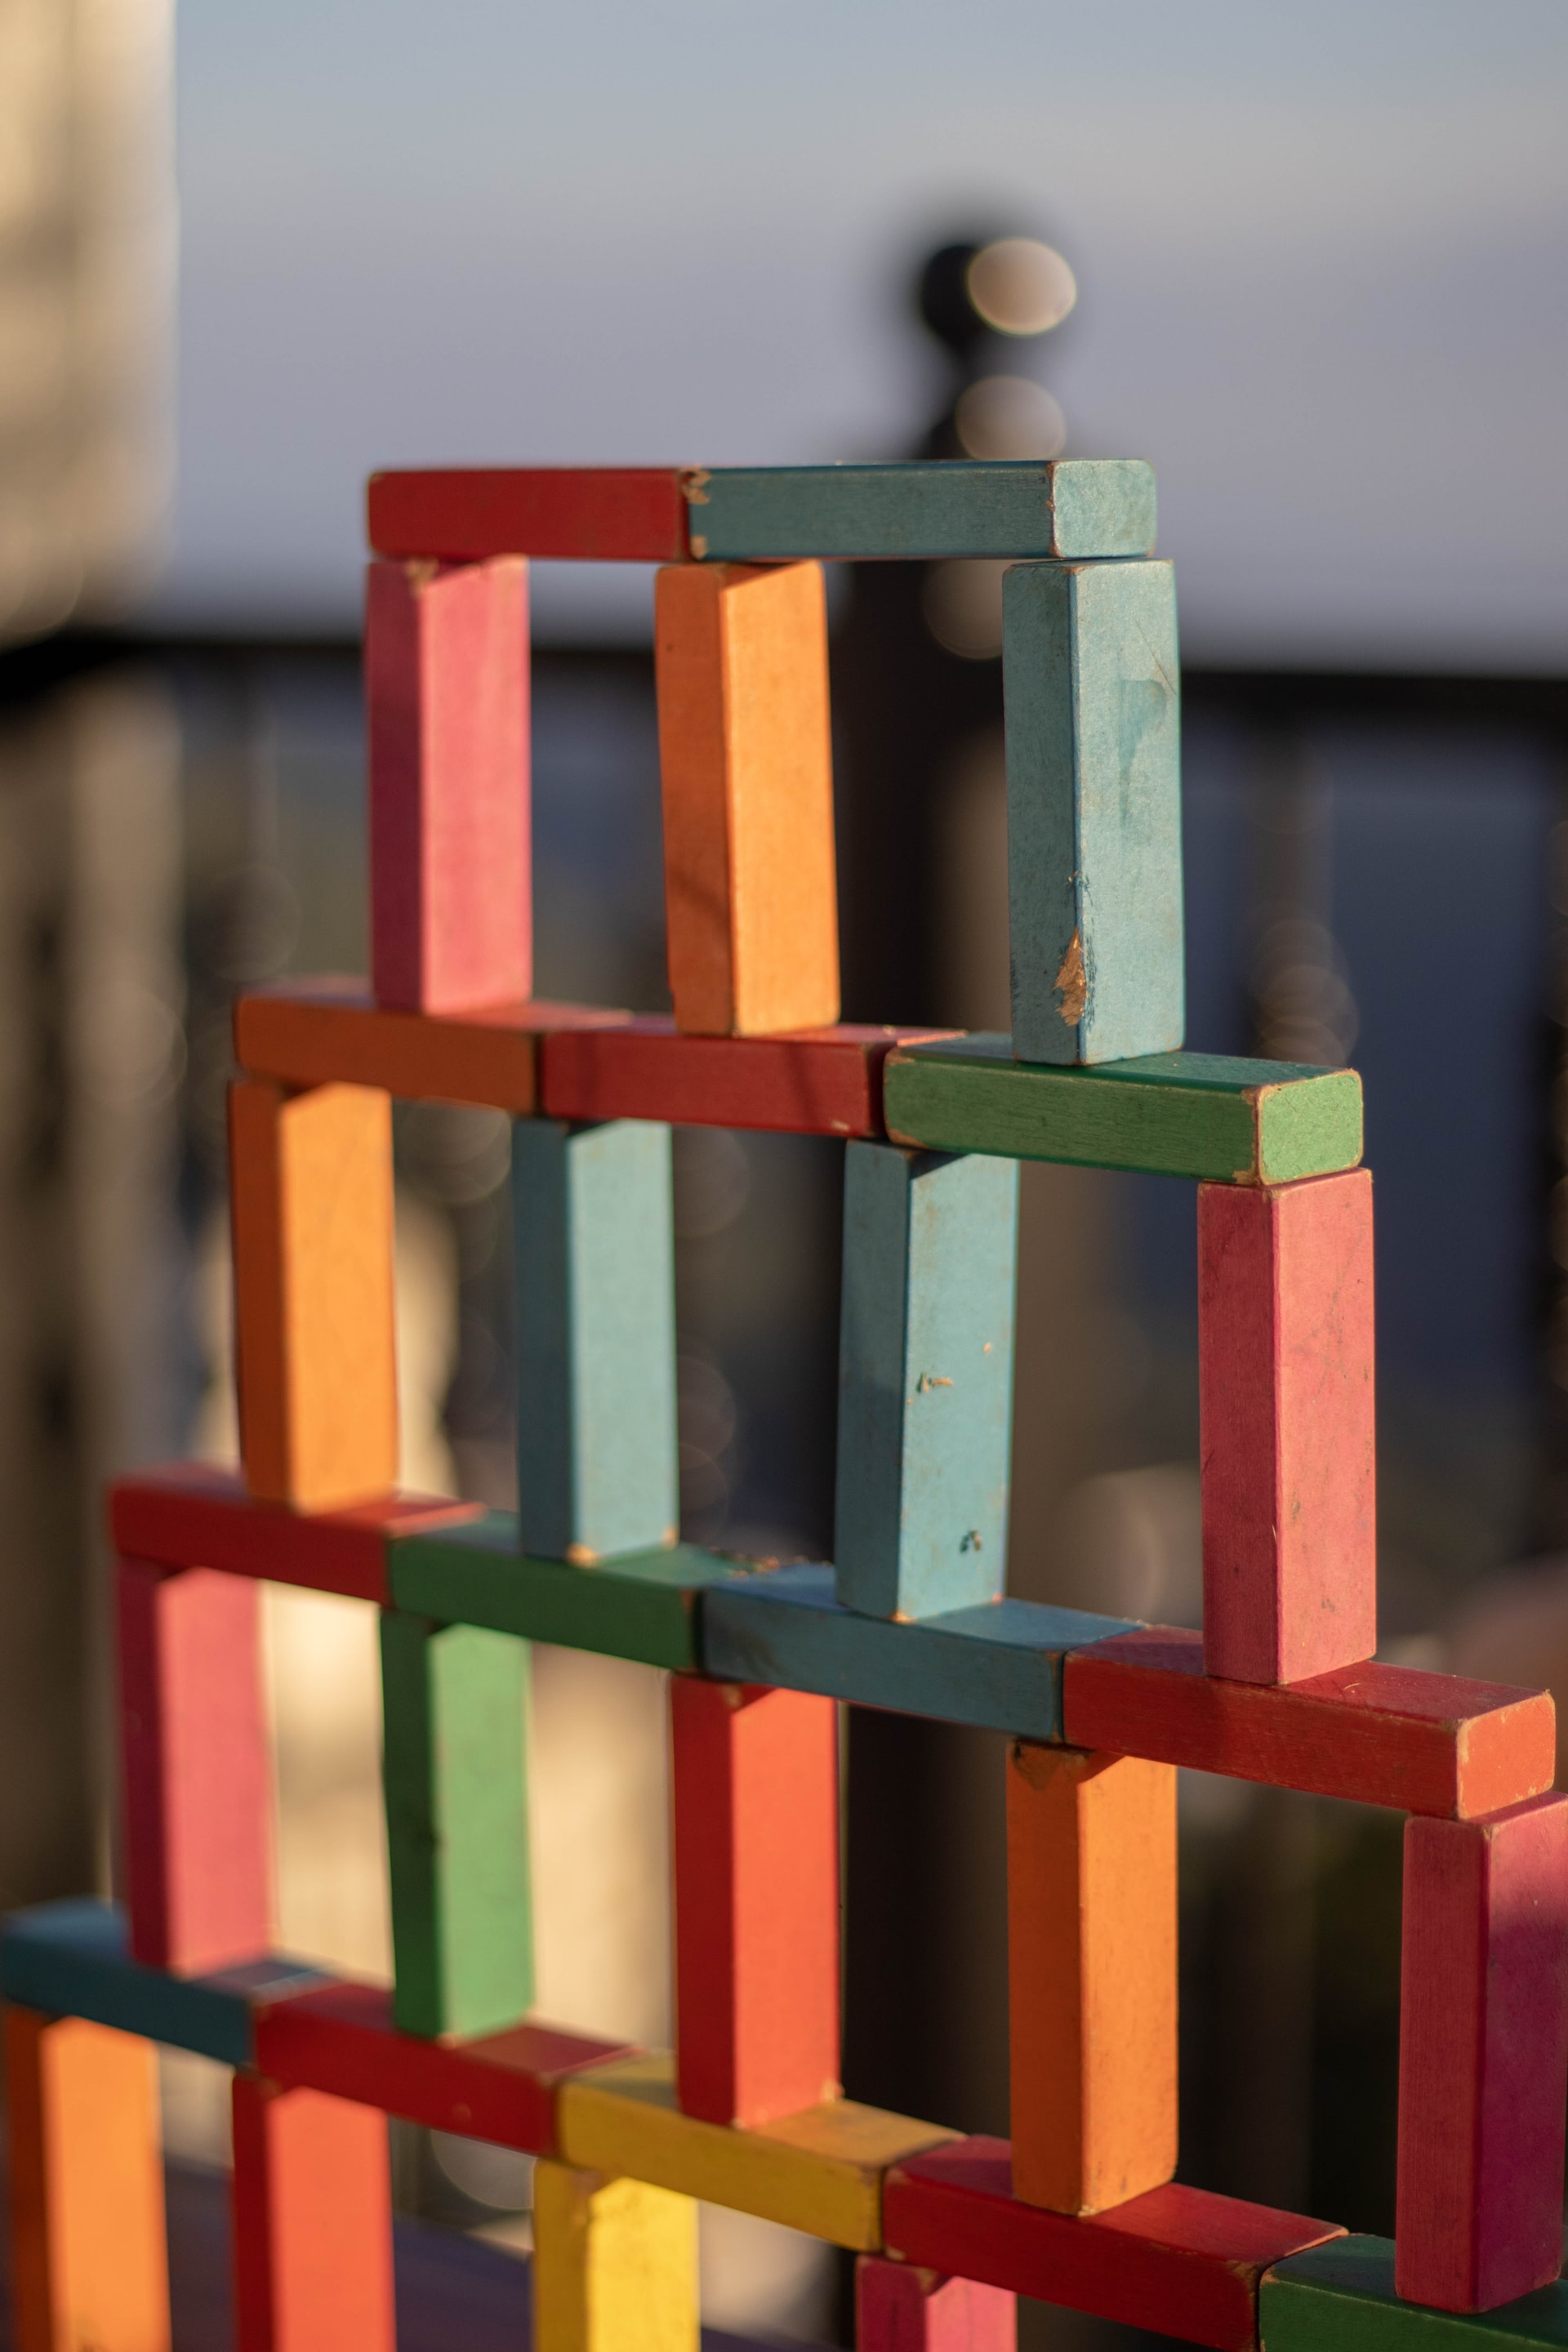 Image building blocks